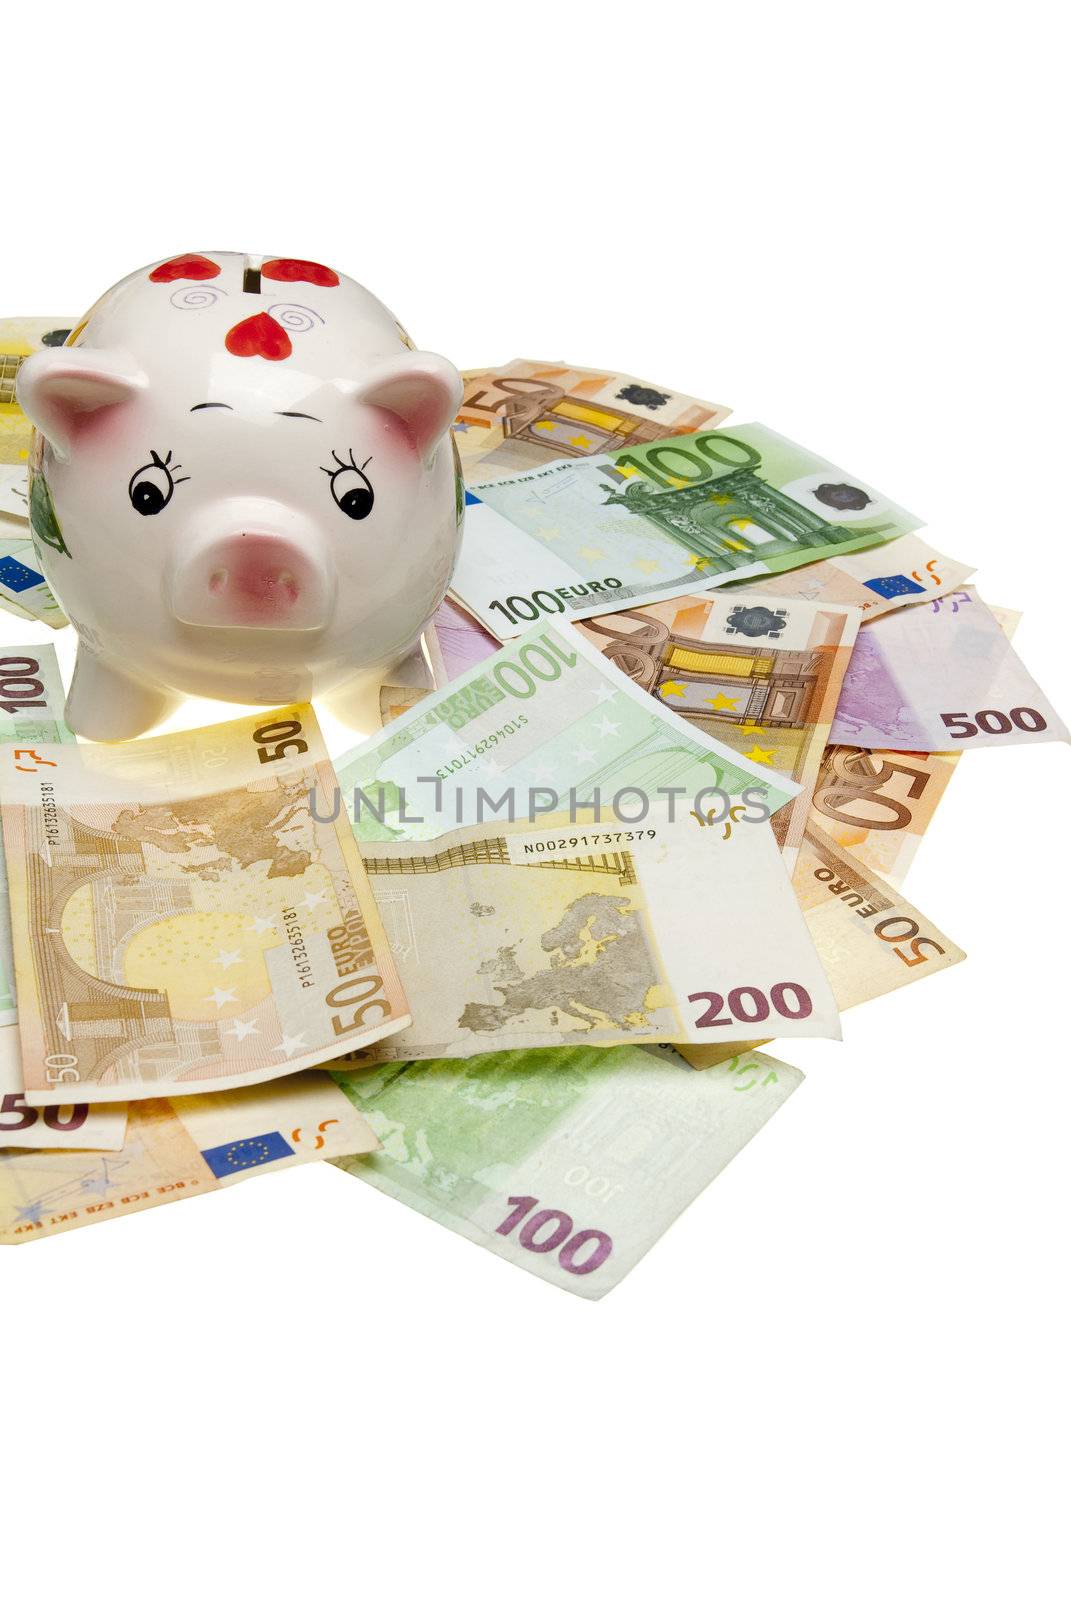 Piggy bank with Euro bills
